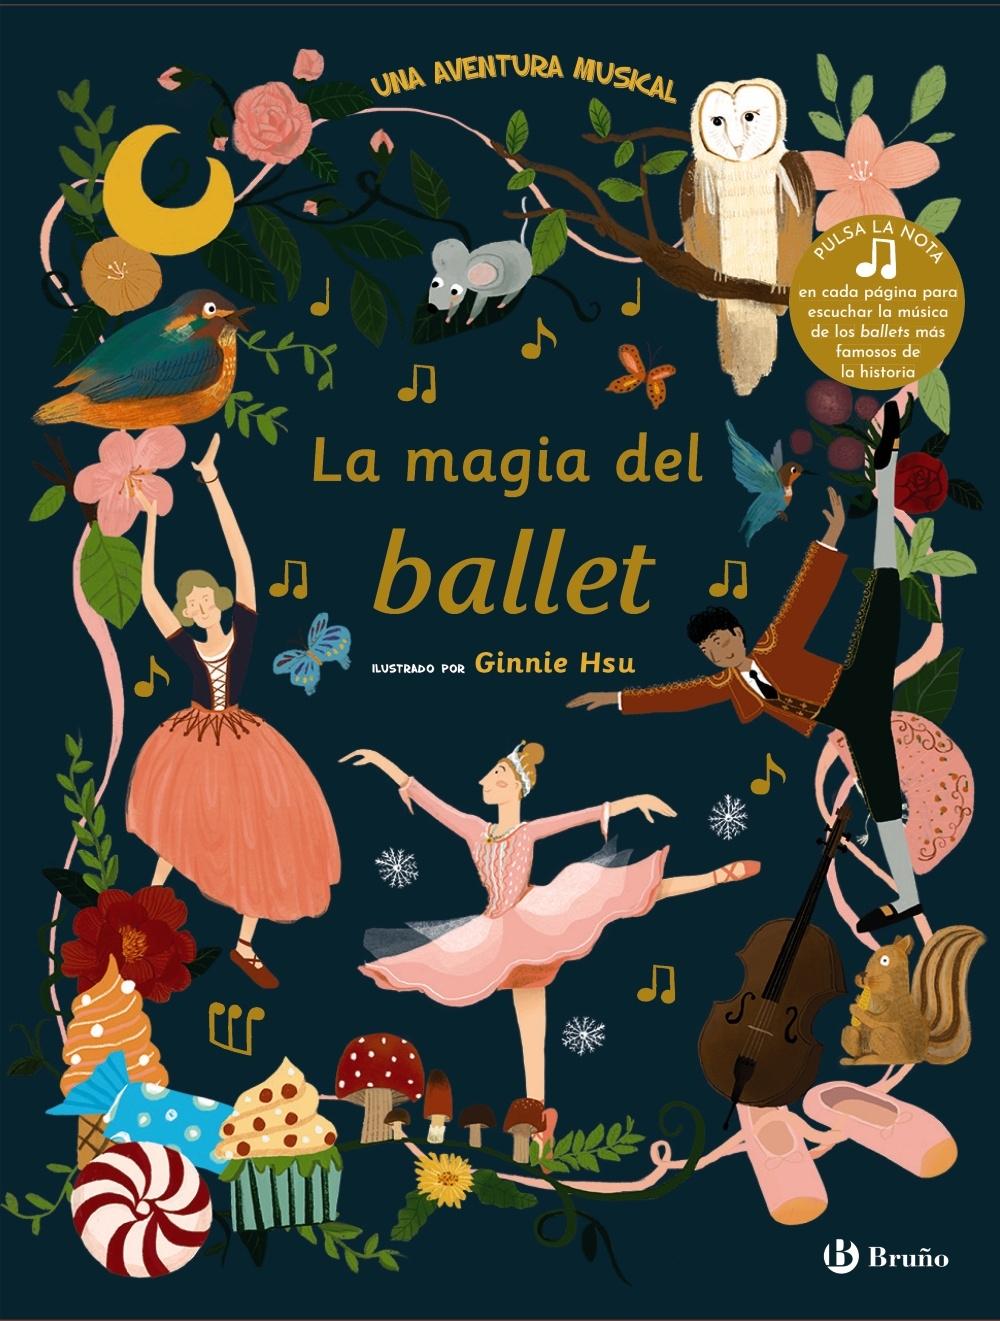 LA MAGIA DEL BALLET "UNA AVENTURA MUSICAL". 